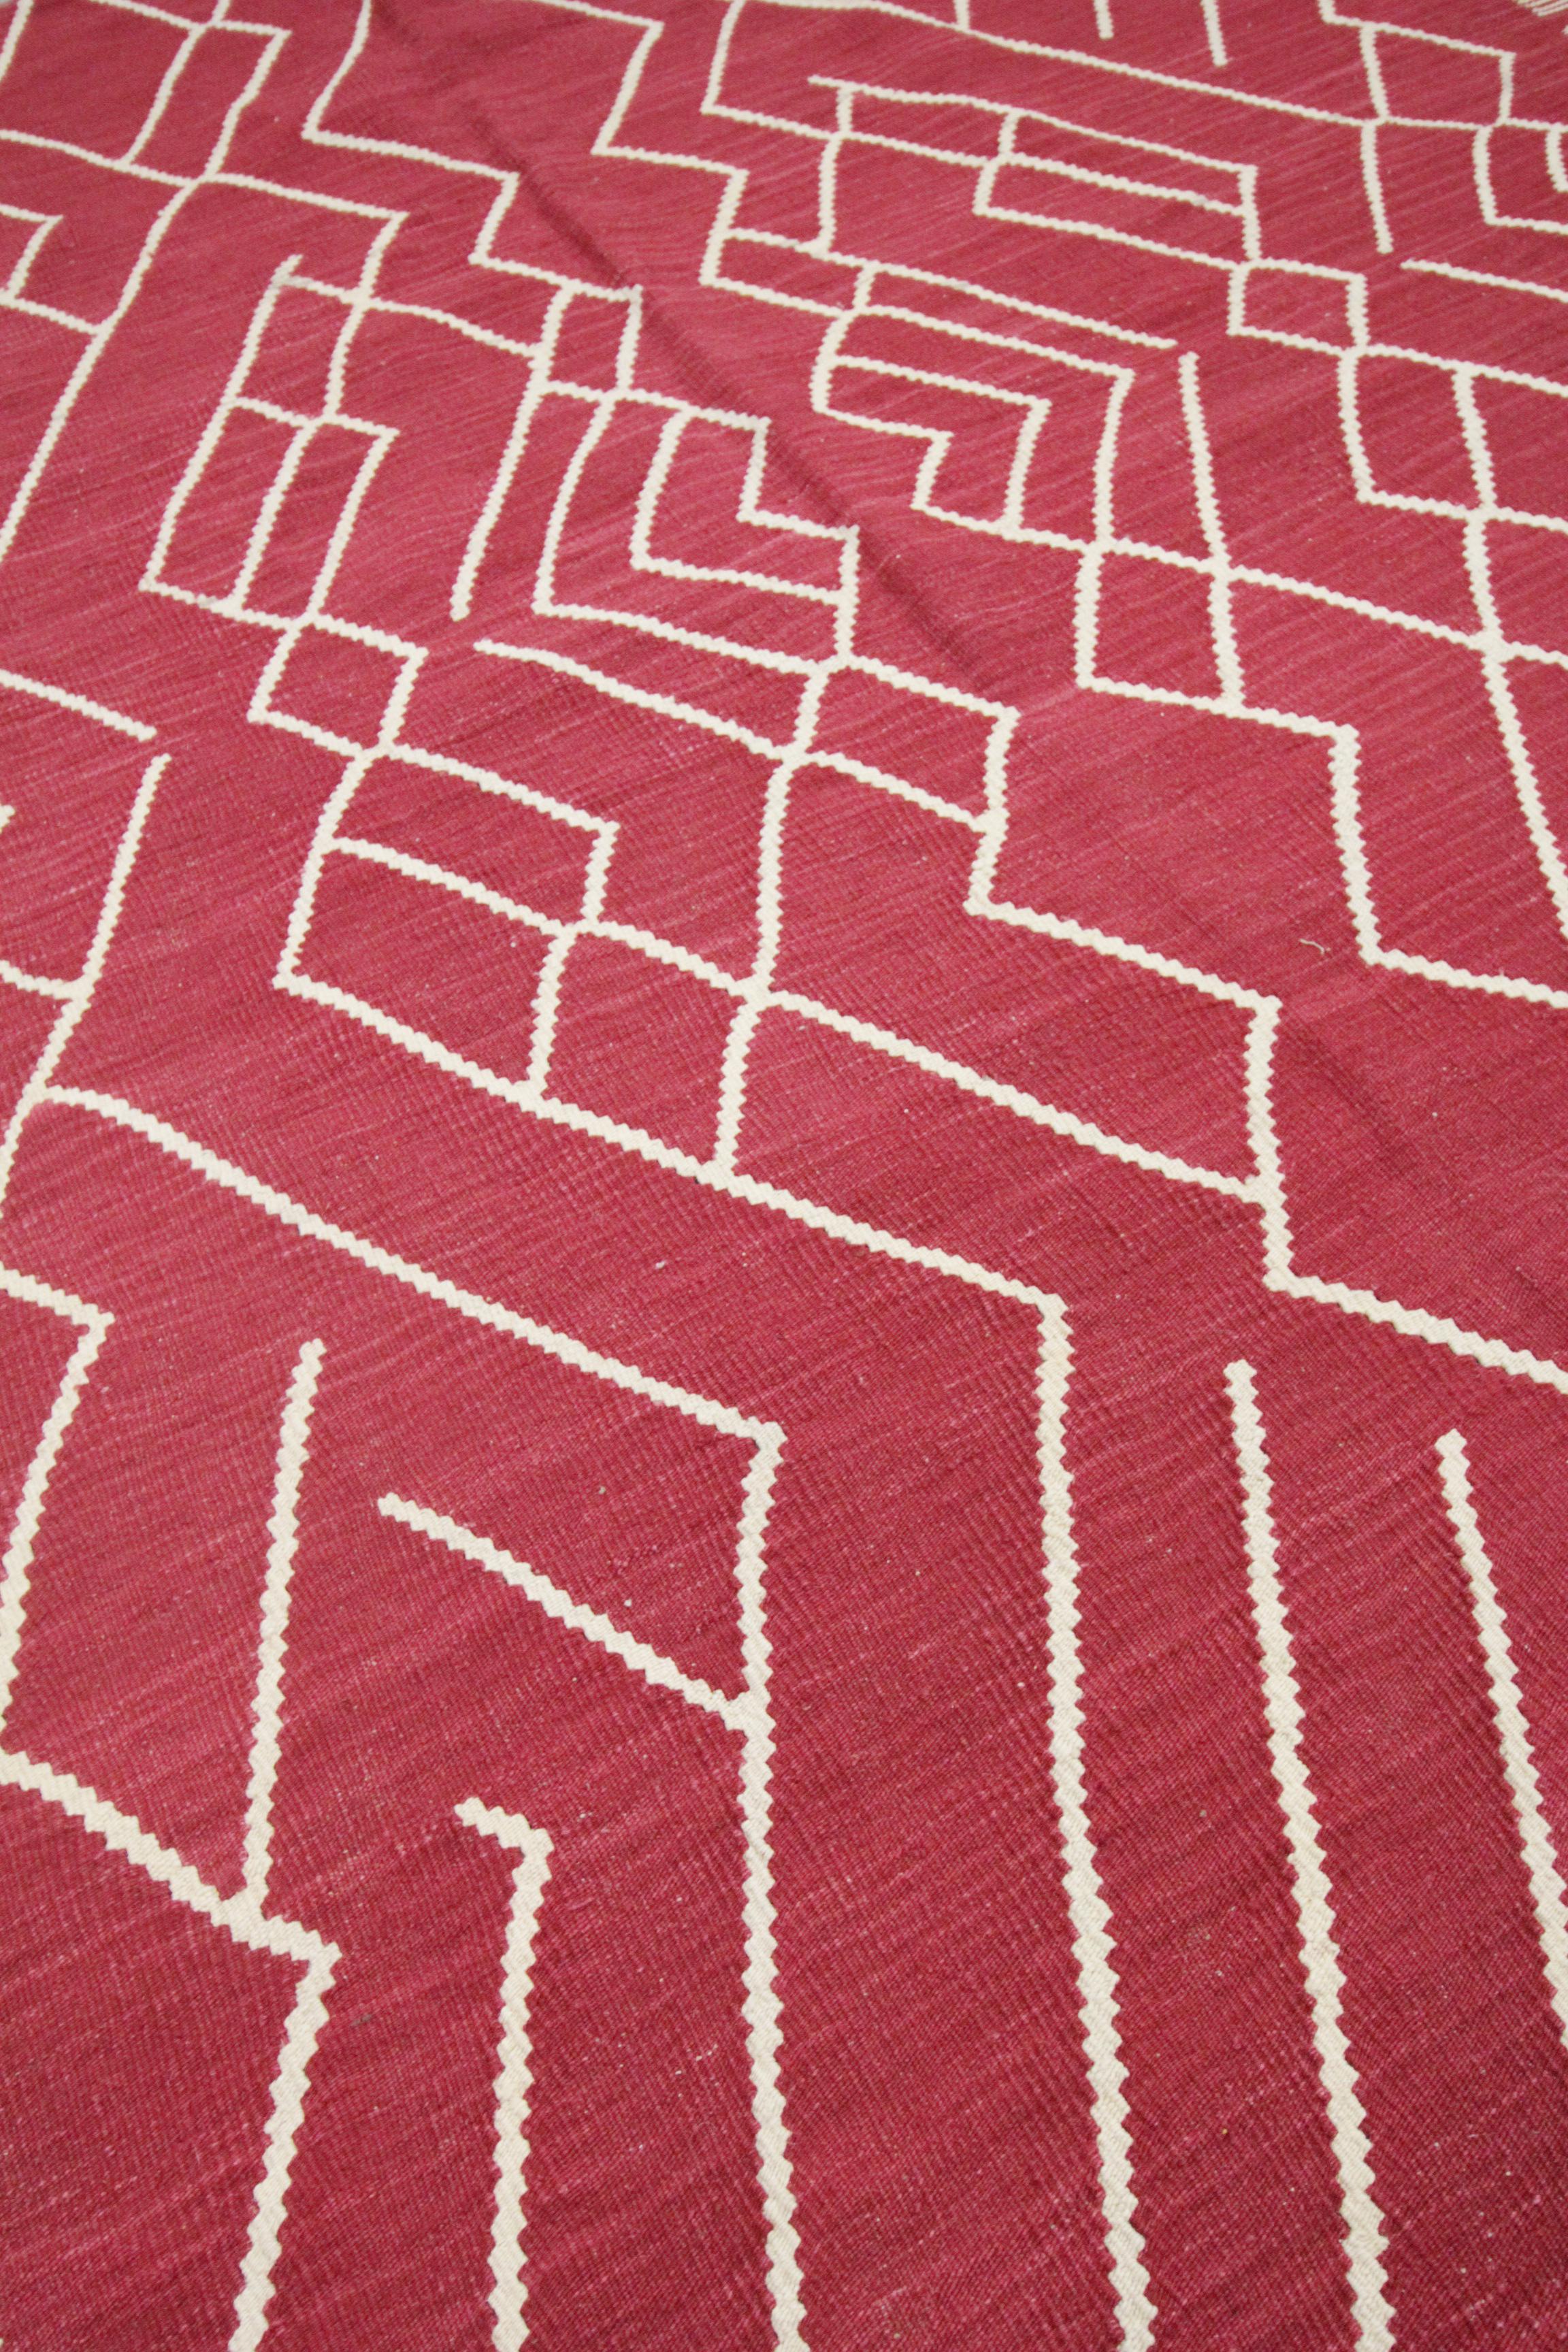 Mid-Century Modern Modern Kilim Rug Handmade Geometric Scandinavian Style Kilim Area Rug